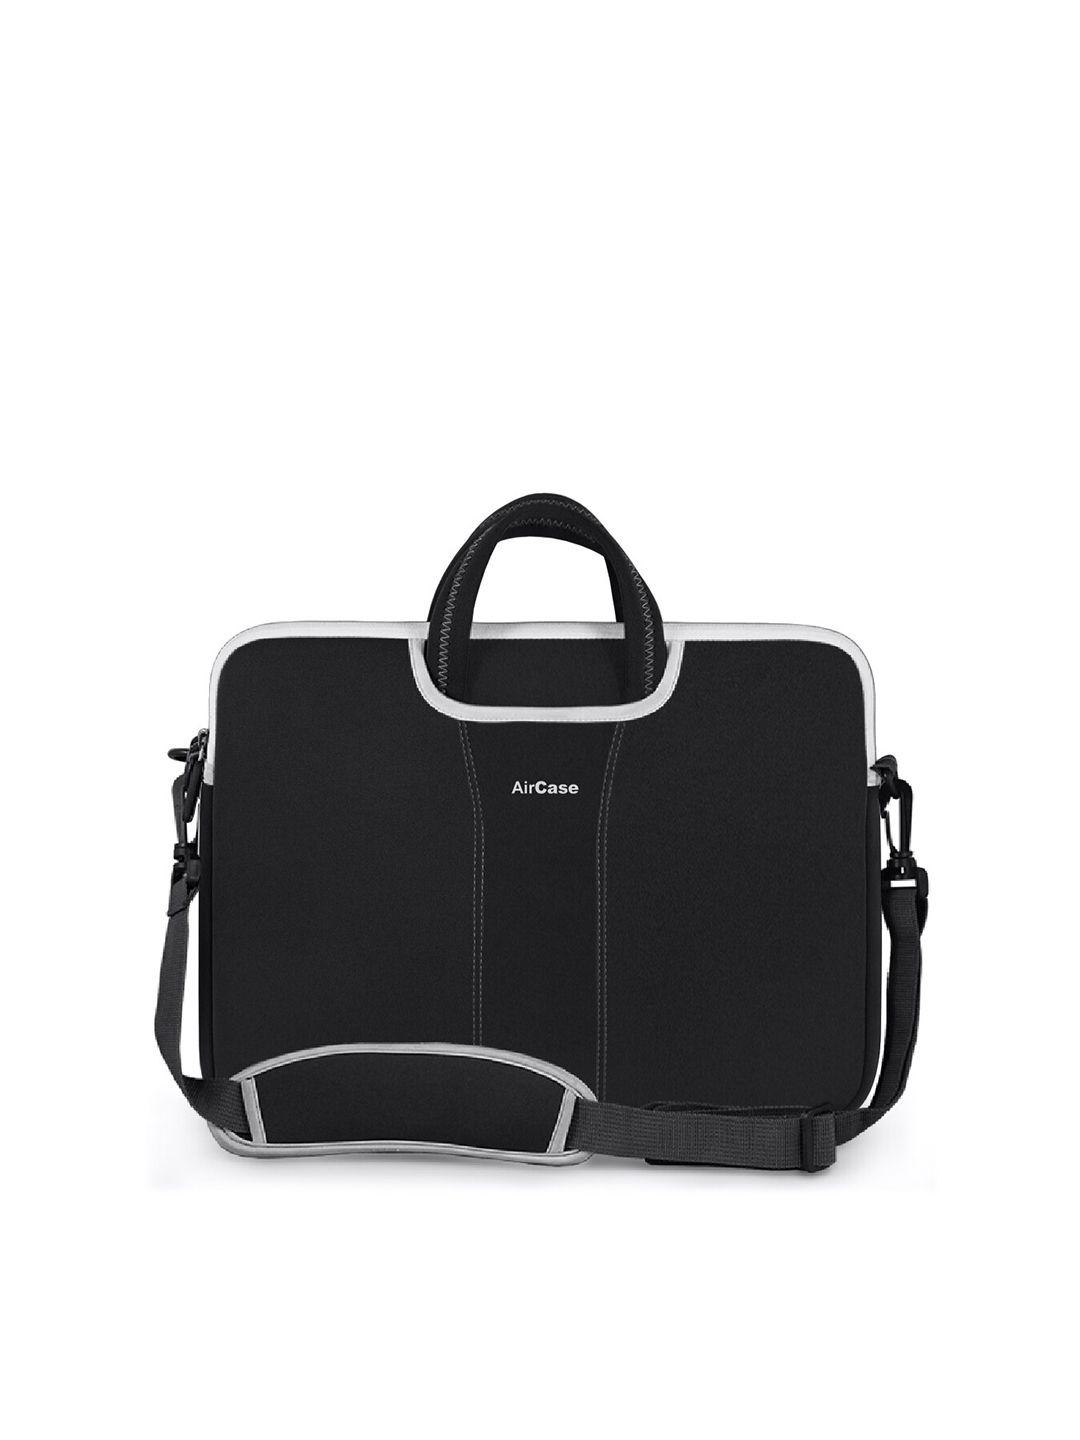 aircase unisex black & grey 15.6 inch messenger laptop bag with detachable shoulder strap